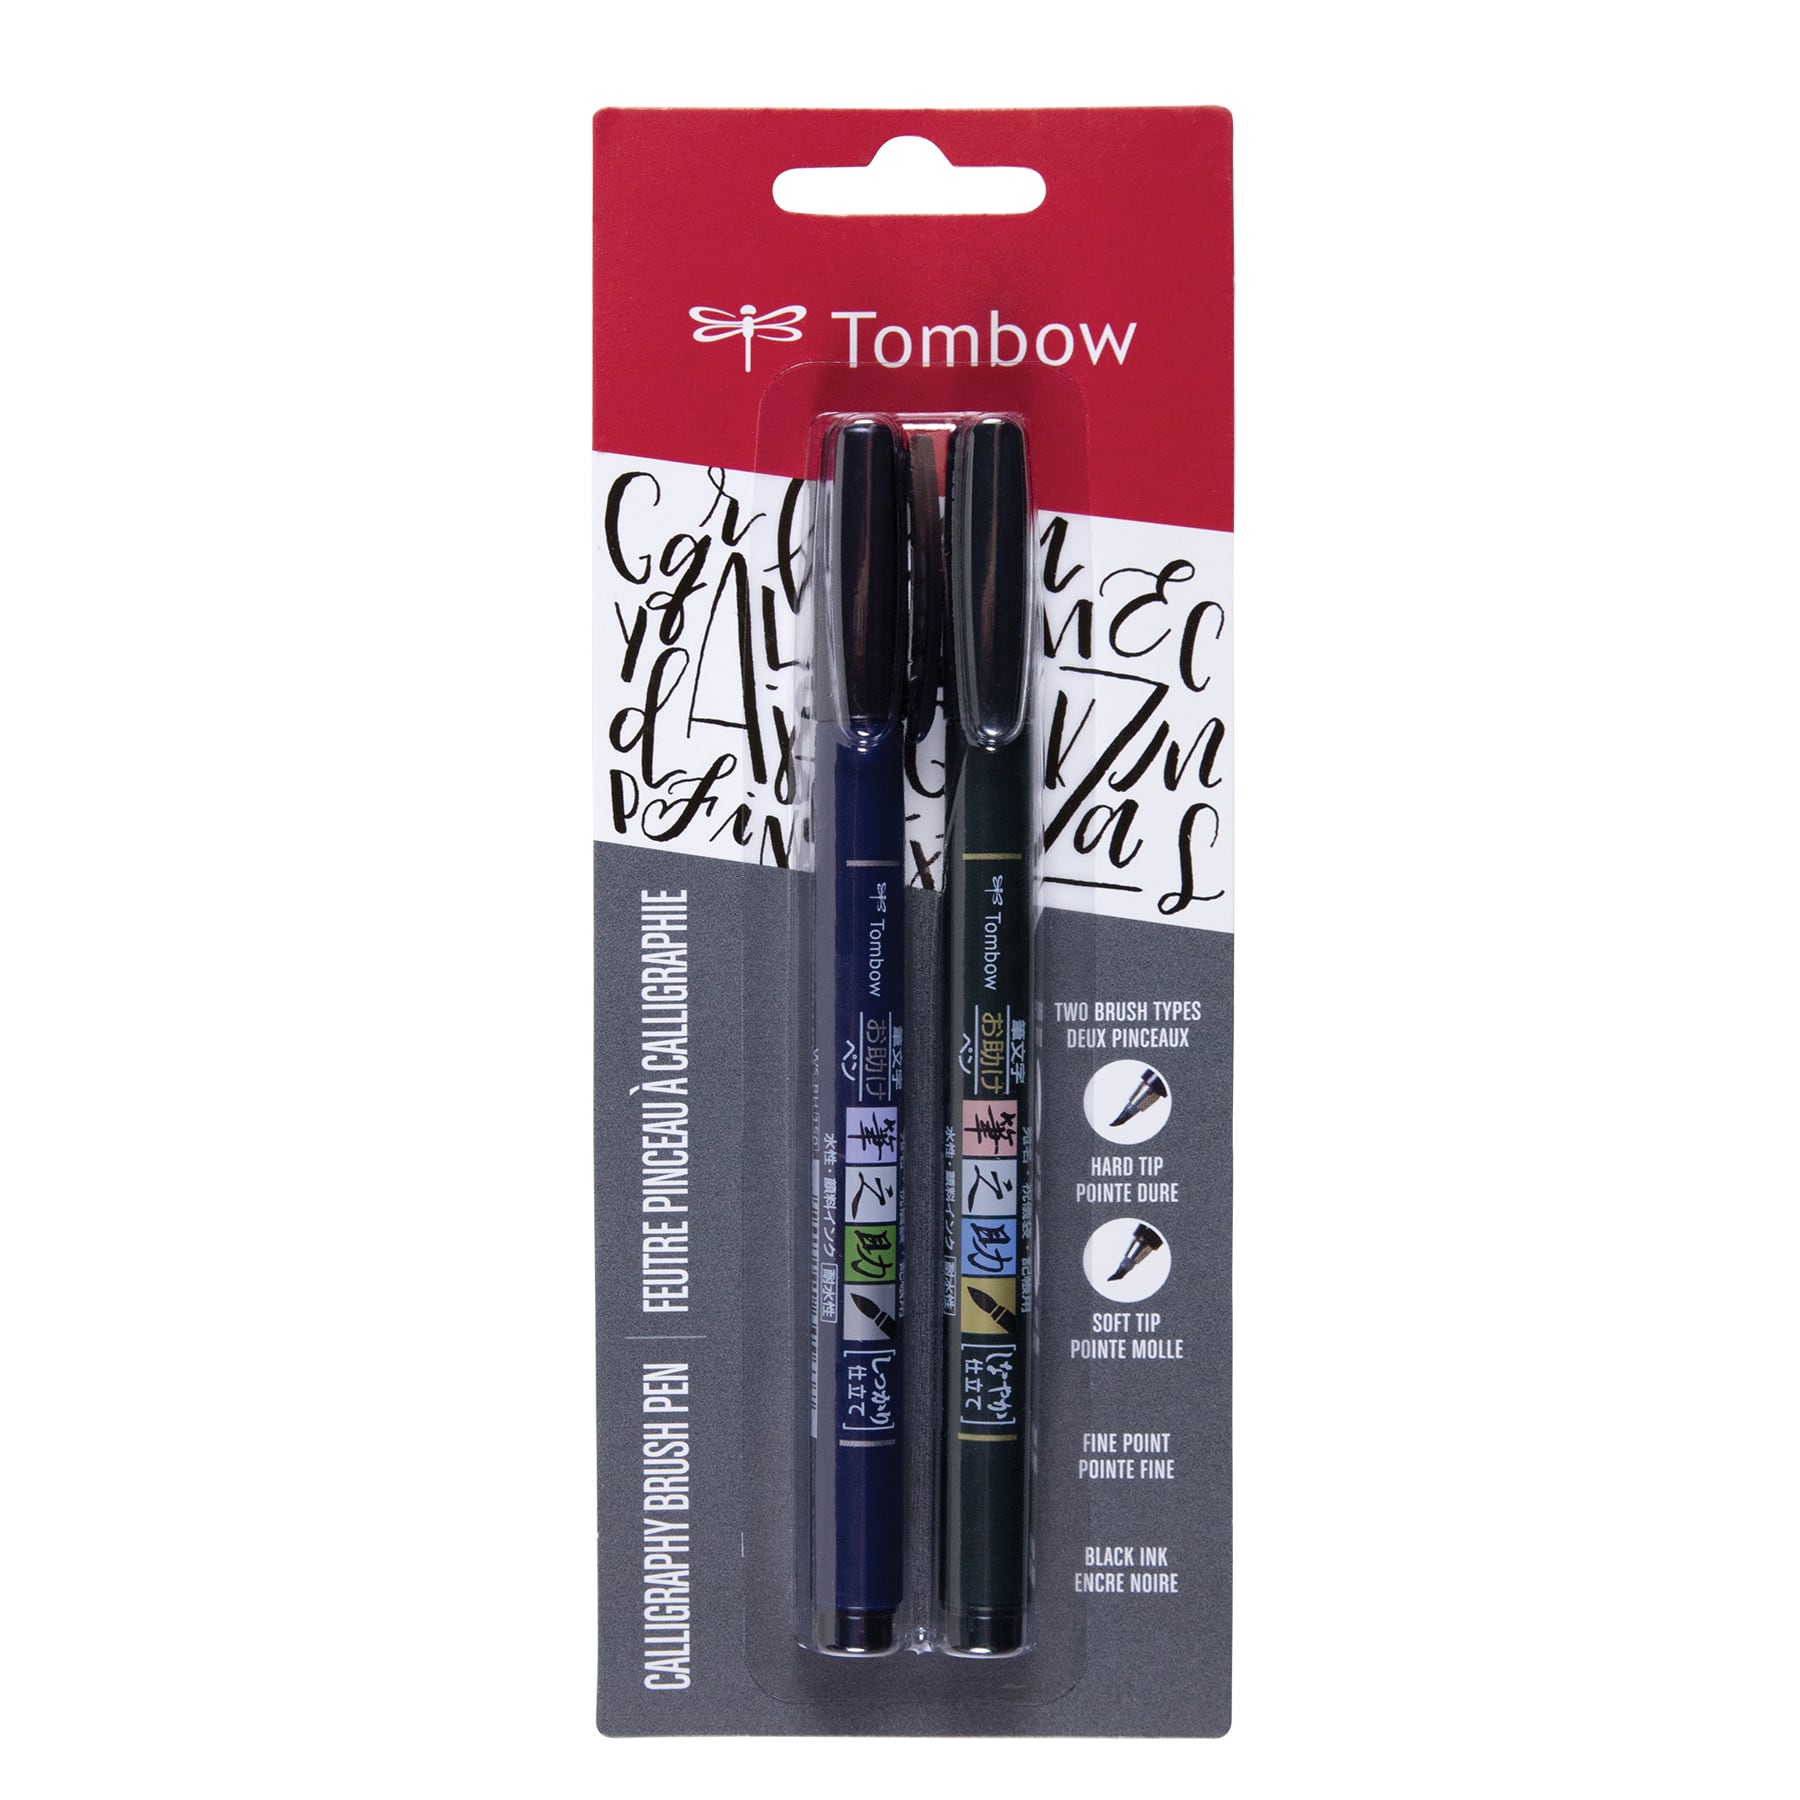 6 Packs: 2 ct. (12 total) Tombow Fudenosuke Calligraphy Brush Pens